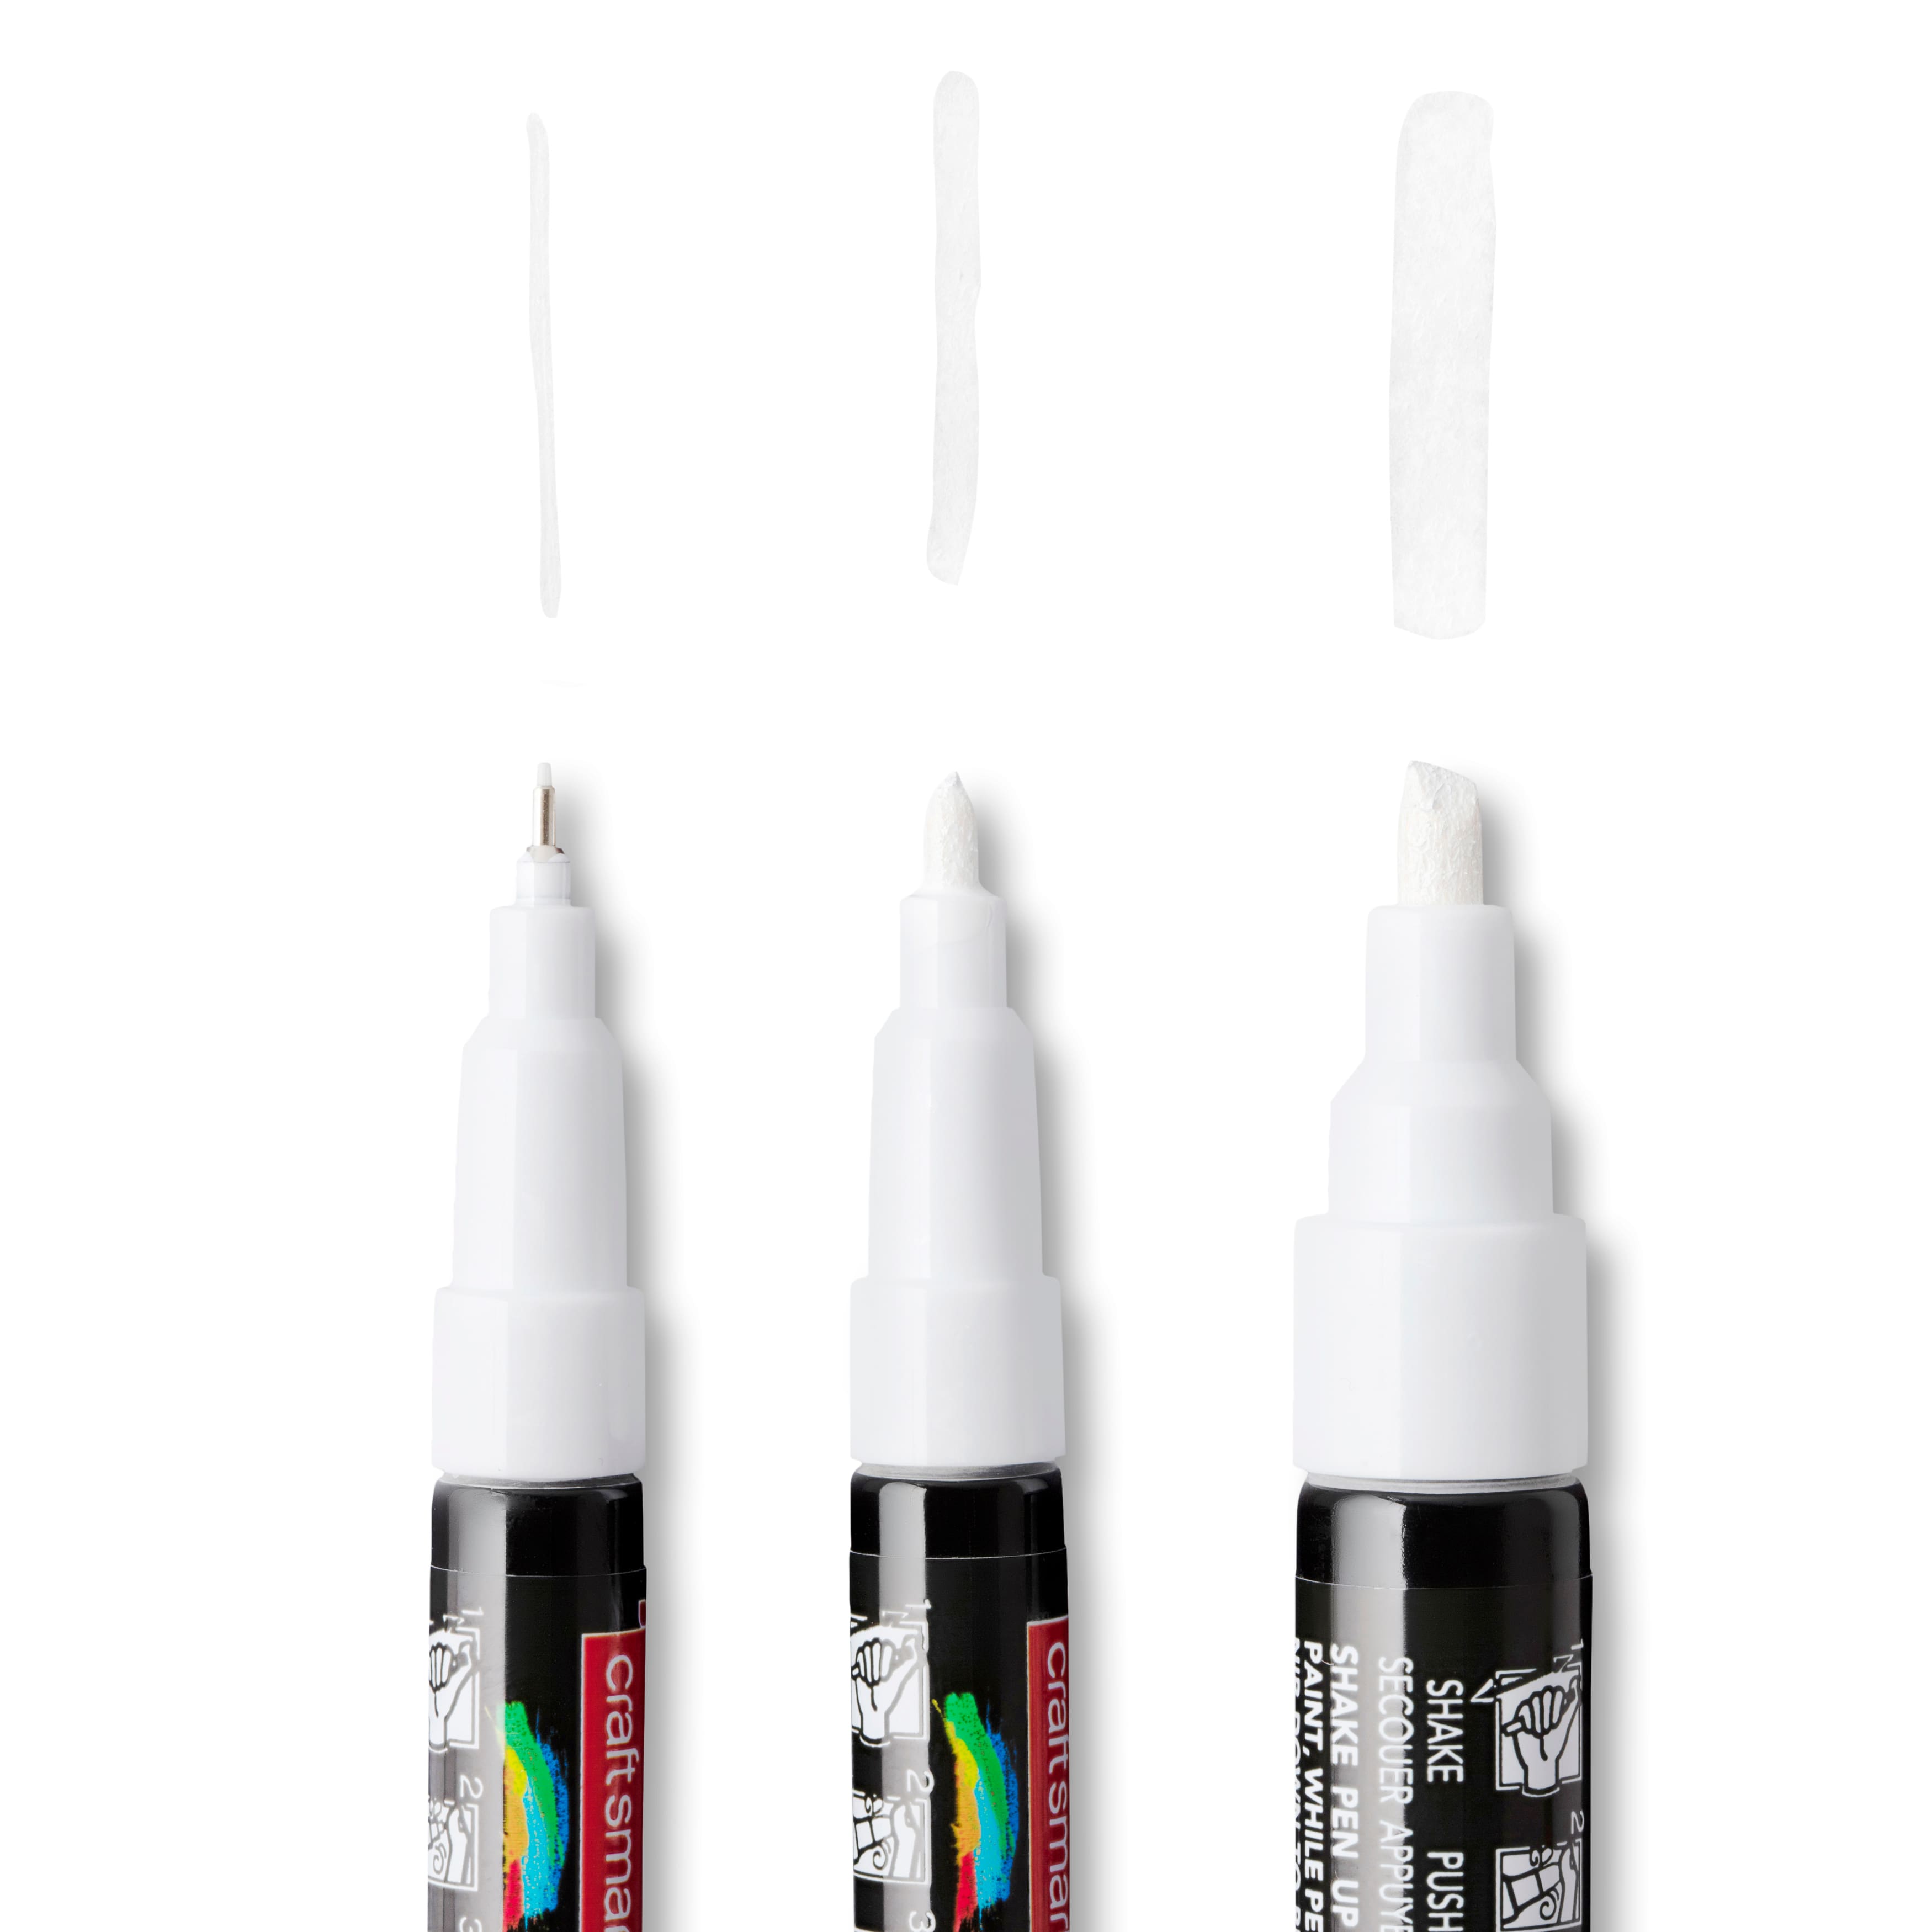 Black & White Paint Pen Set by Craft Smart®